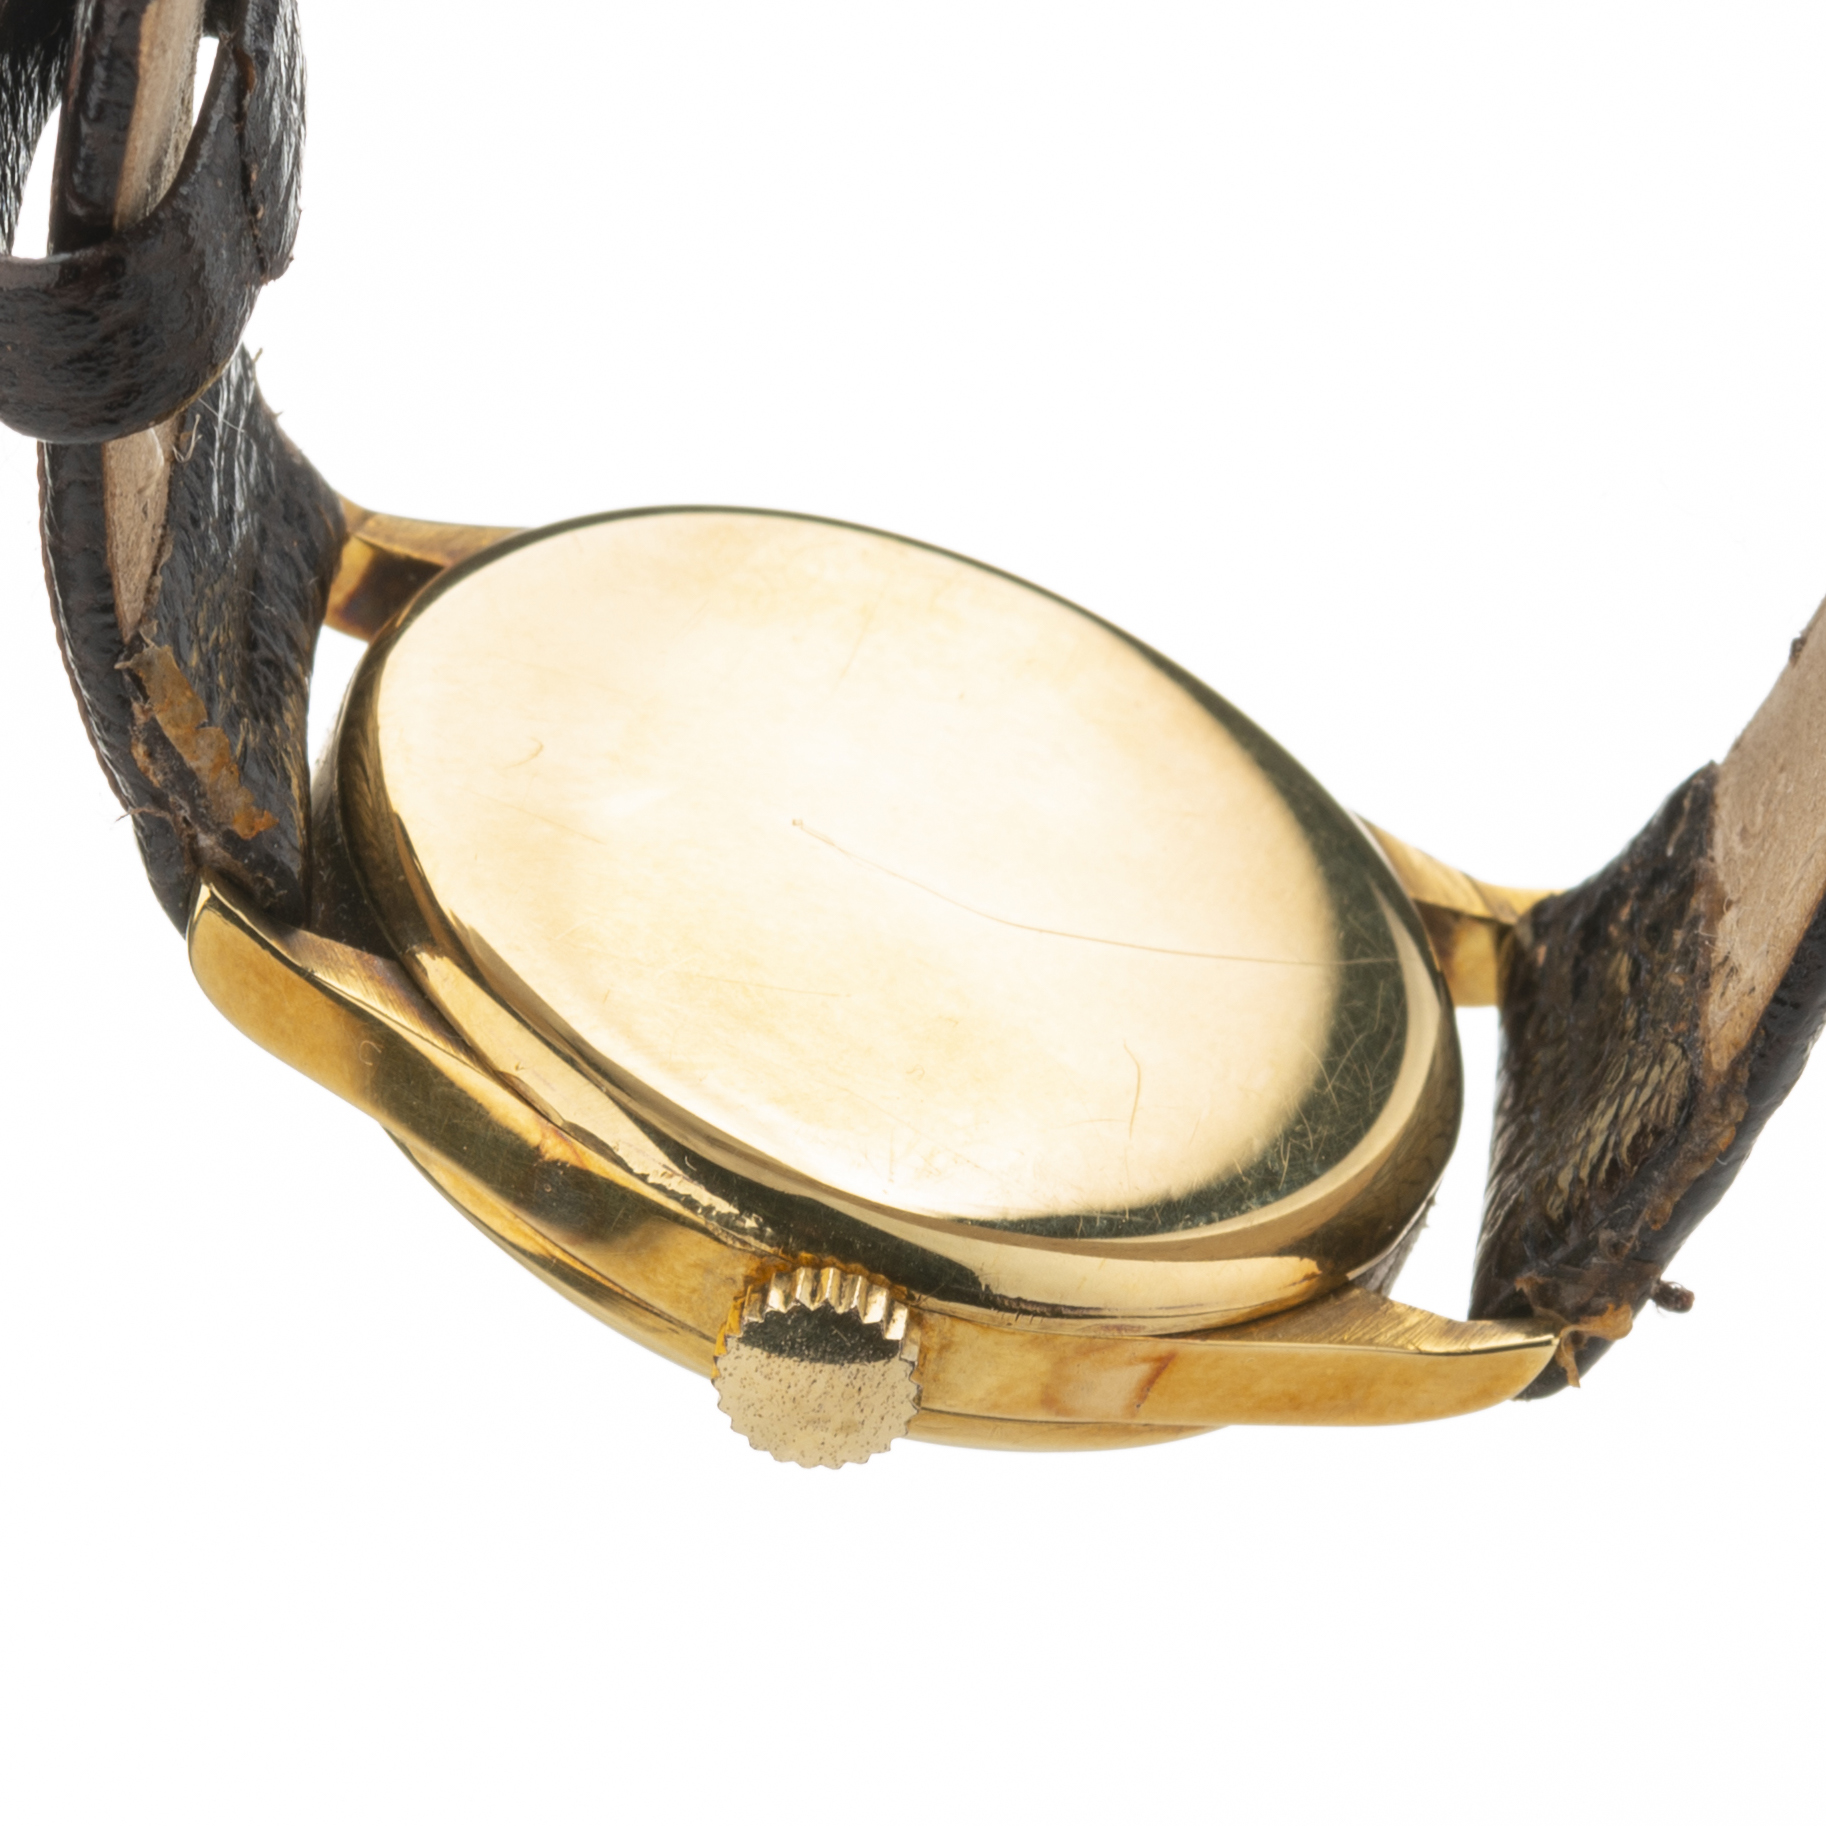 IWC, a 14ct gold wrist watch - Image 2 of 3